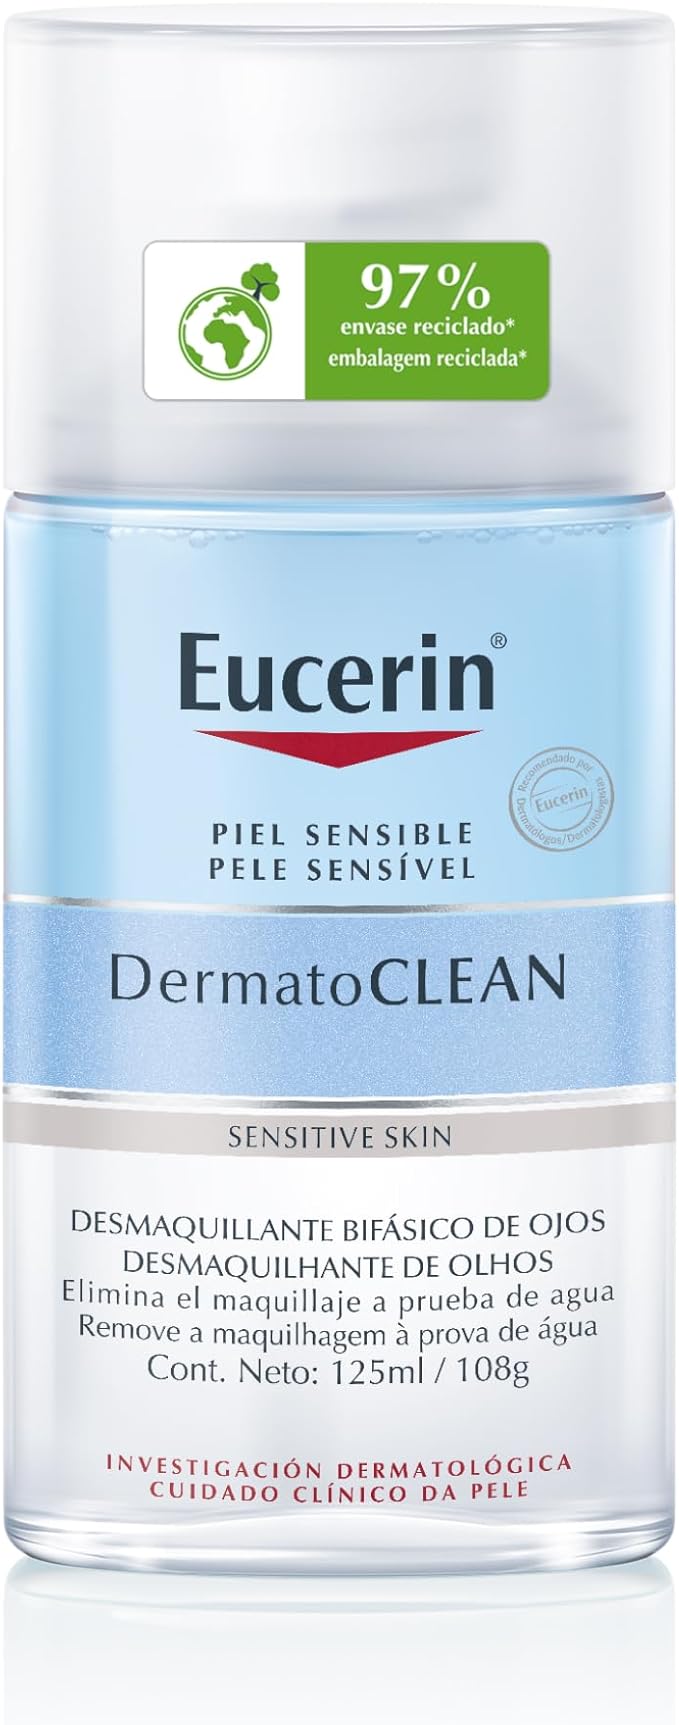 Eucerin DermatoCLEAN piel sensible 125ml